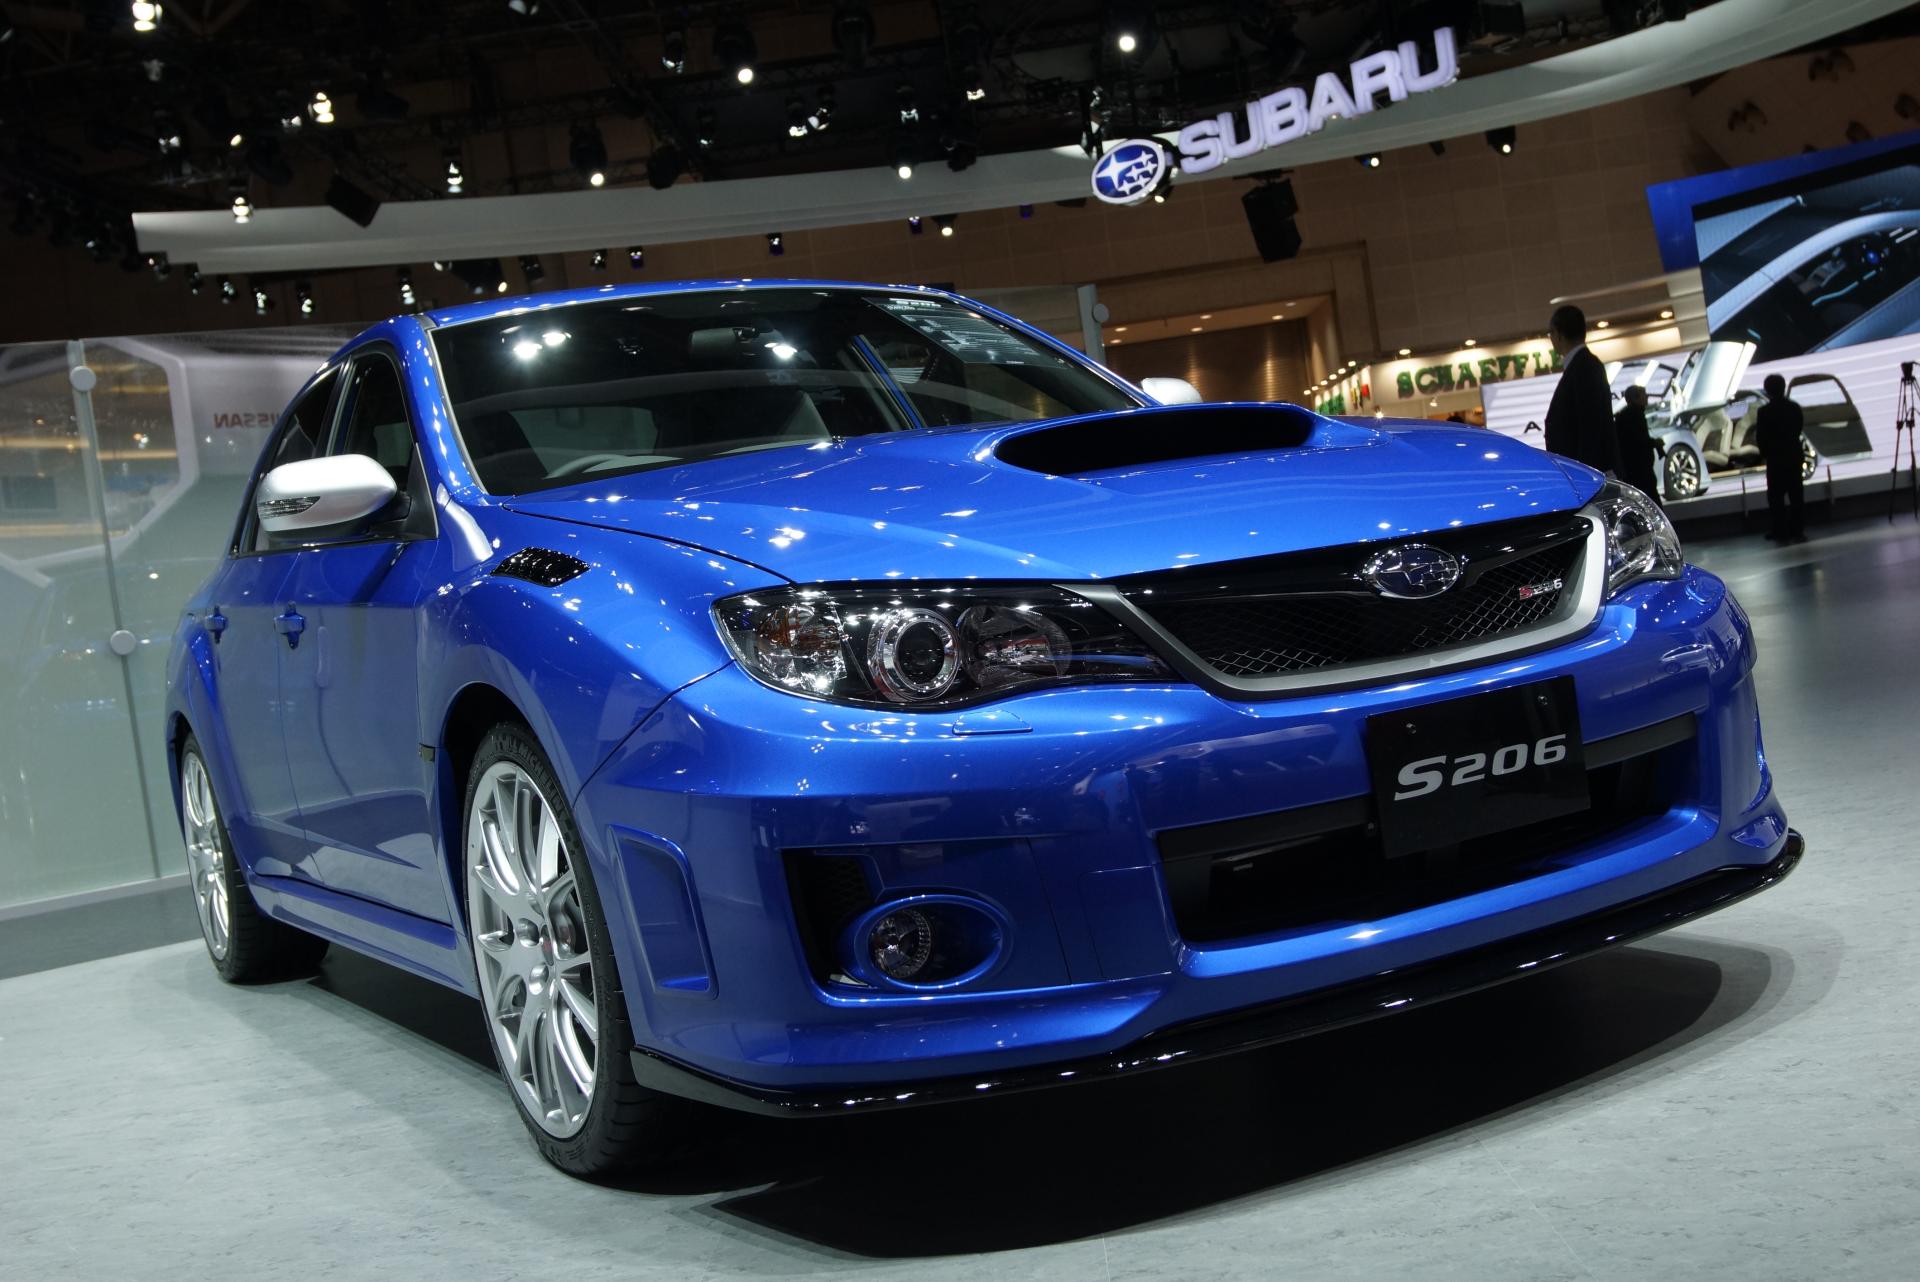 Купить субару в нижнем новгороде. Subaru Impreza WRX STI 2012. Subaru Impreza WRX 2012. Subaru Impreza s206. Subaru WRX STI 2012.